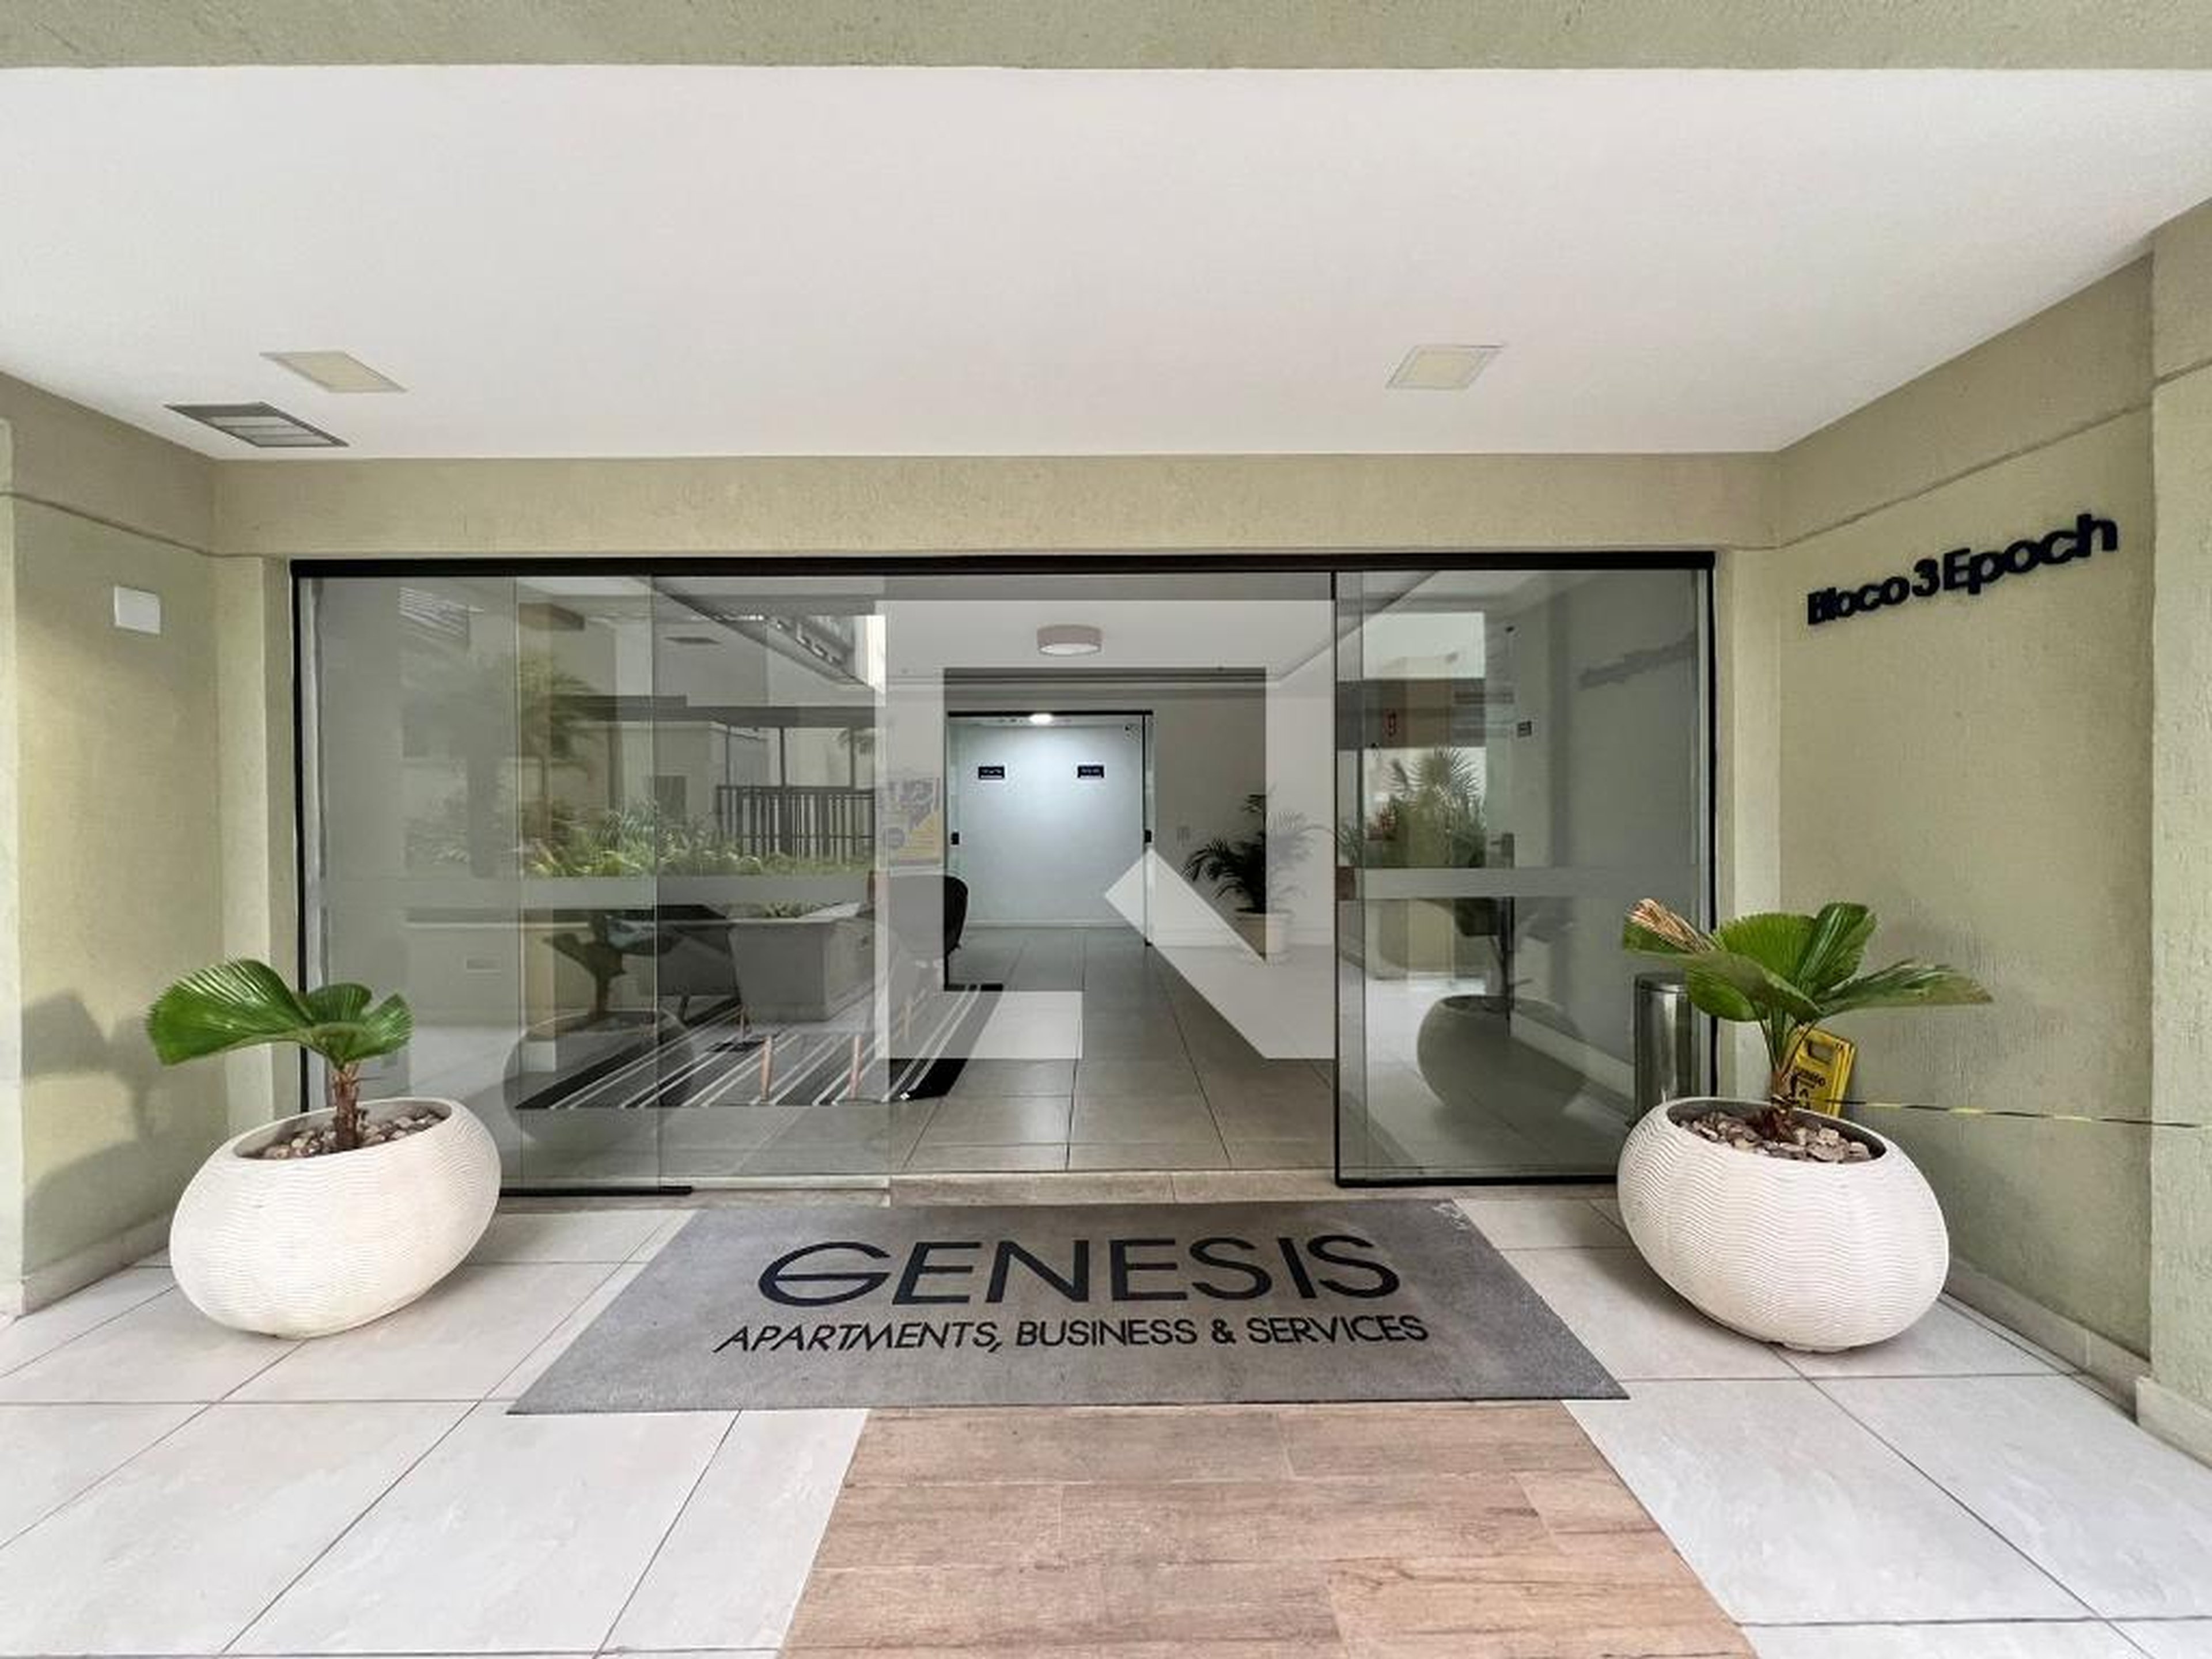 Área comum - Genesis Apartaments, Business & Services